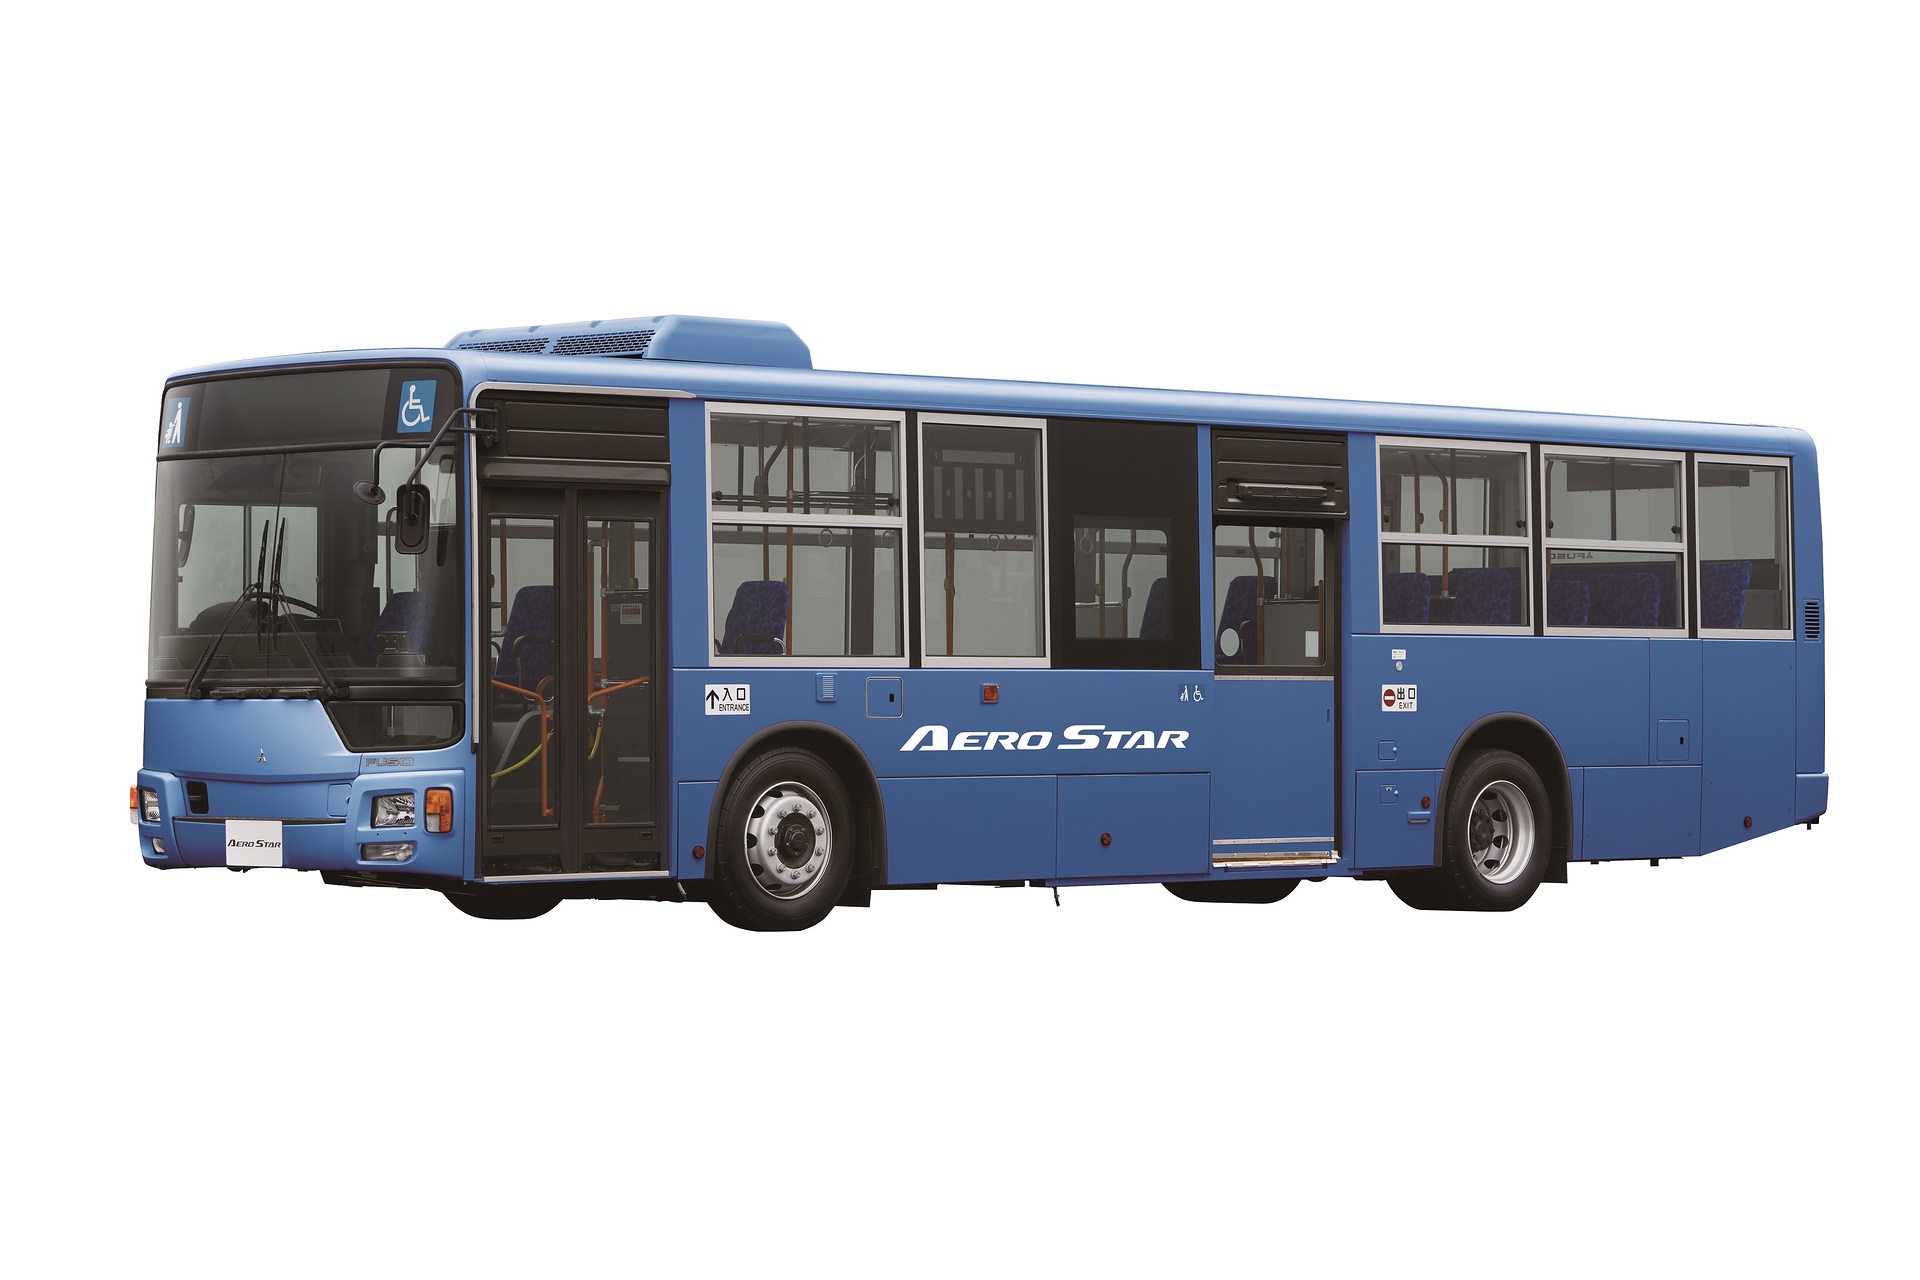 Mitsubishi Fuso launches a new model of the Aero Star city bus